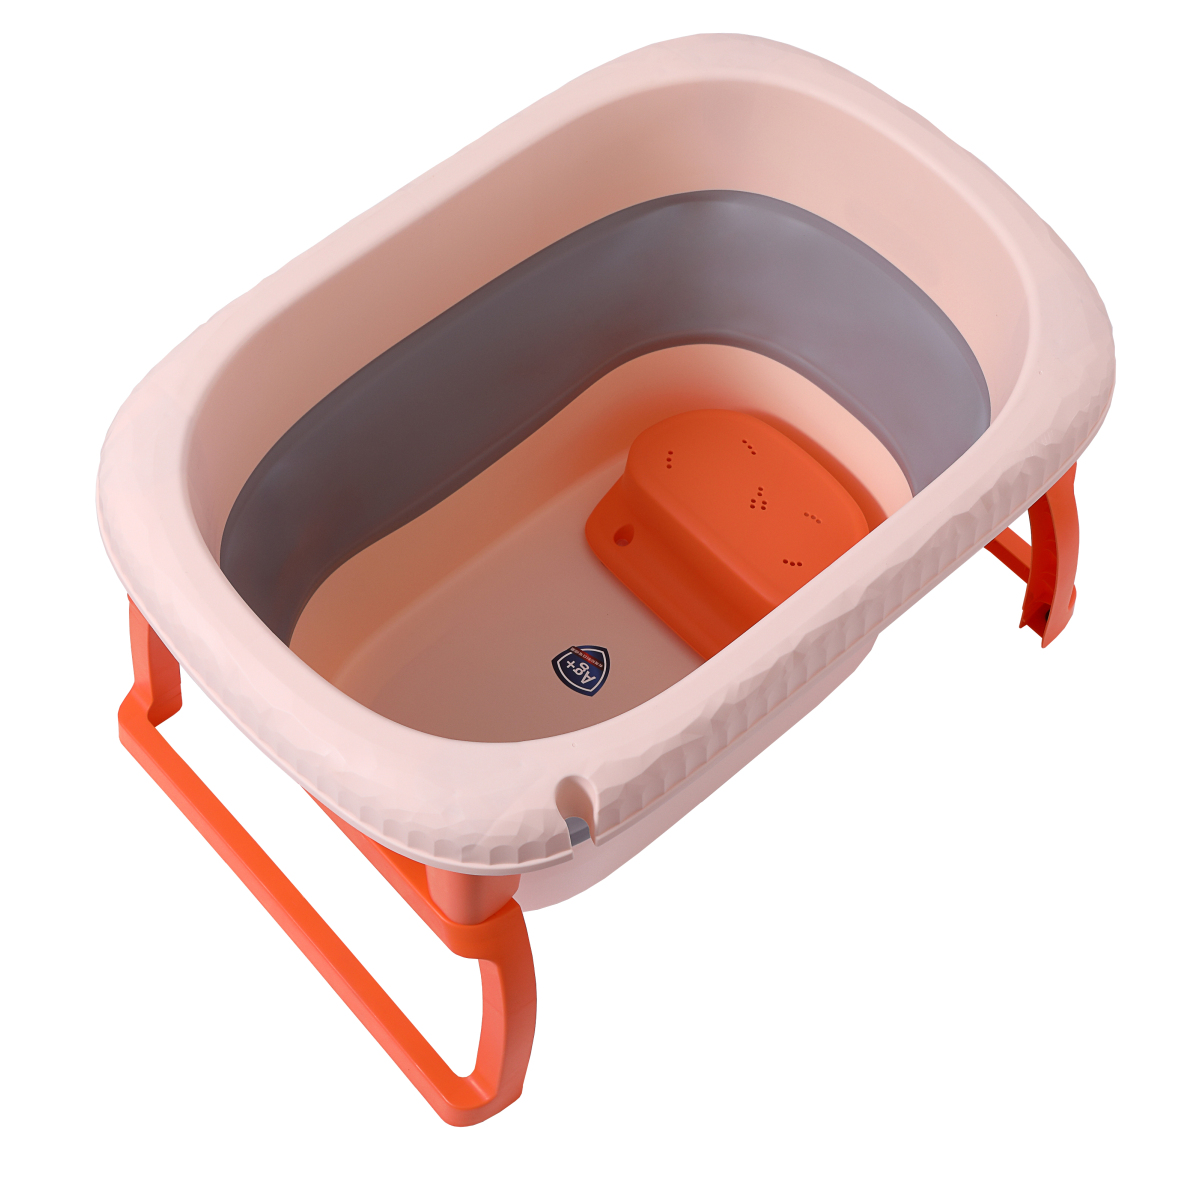 IKIDO - Grande baignoire pliable ultra compact, baignoire enfant